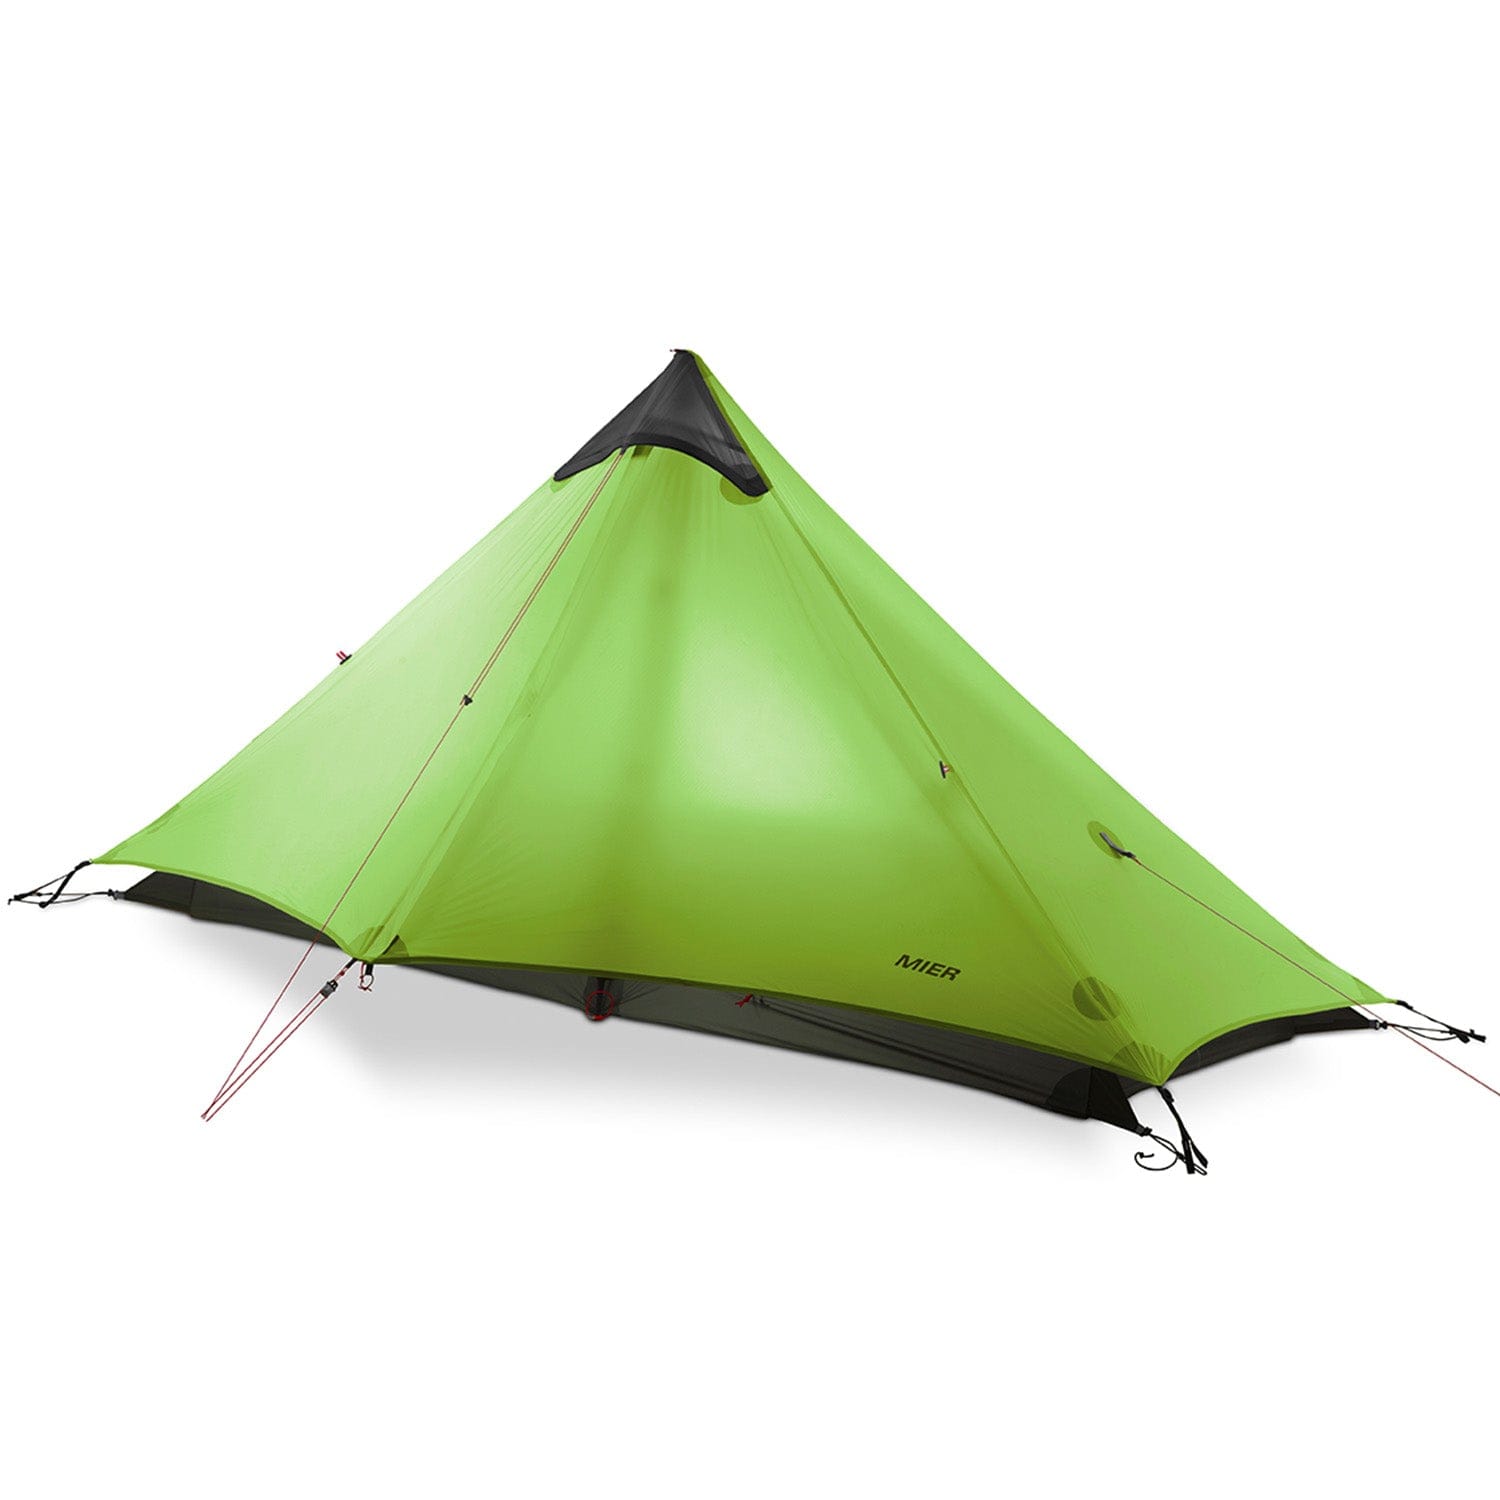 Lanshan 1 Person Ultralight Backpacking Tent Camping Tent Lanshan Tent Green / 1-Person MIER